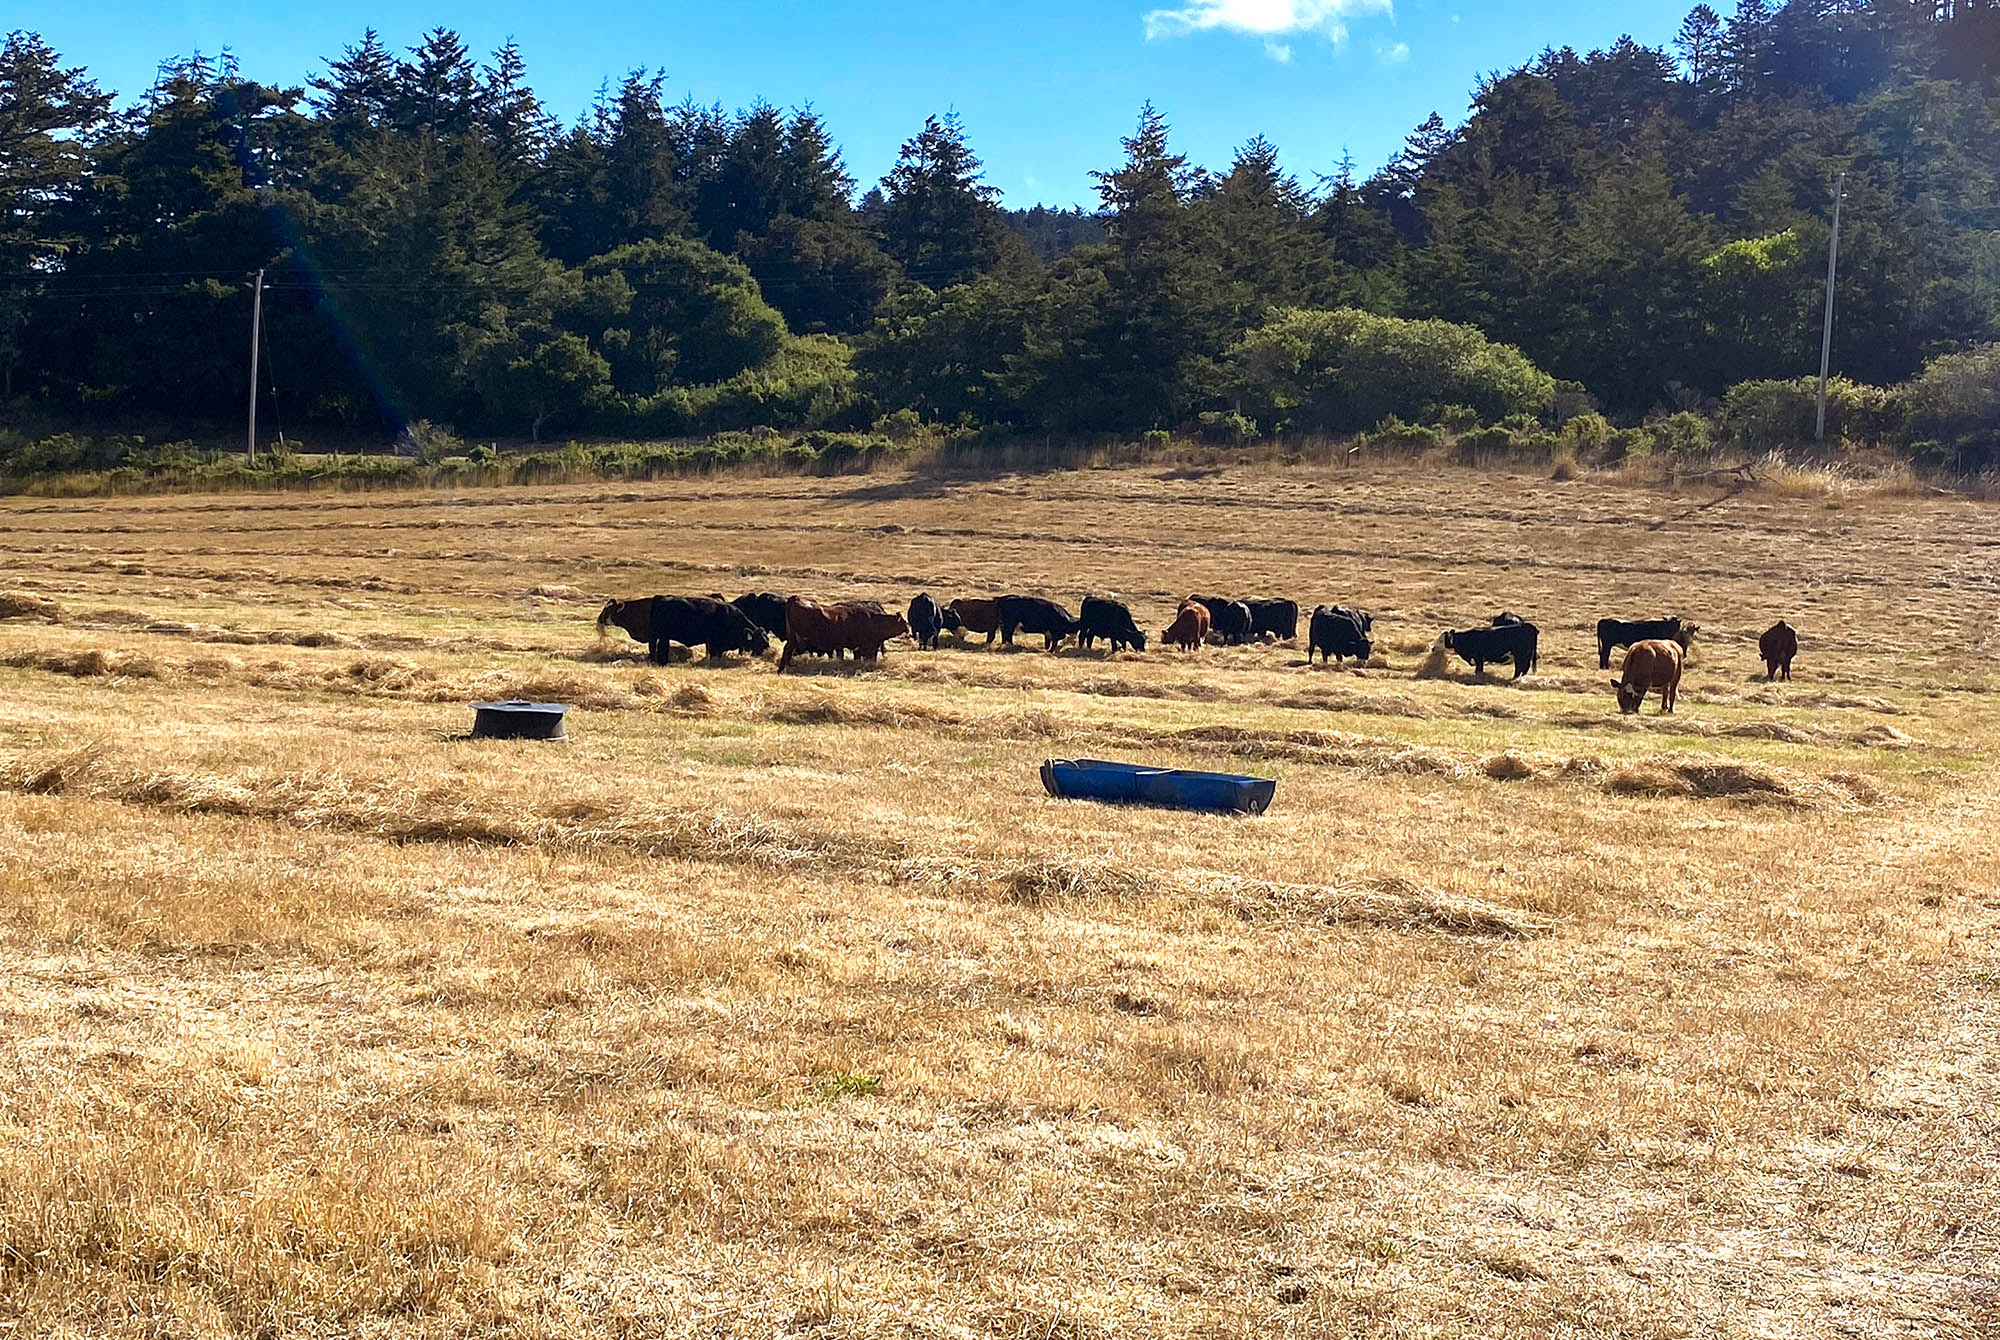 Cows swath grazing